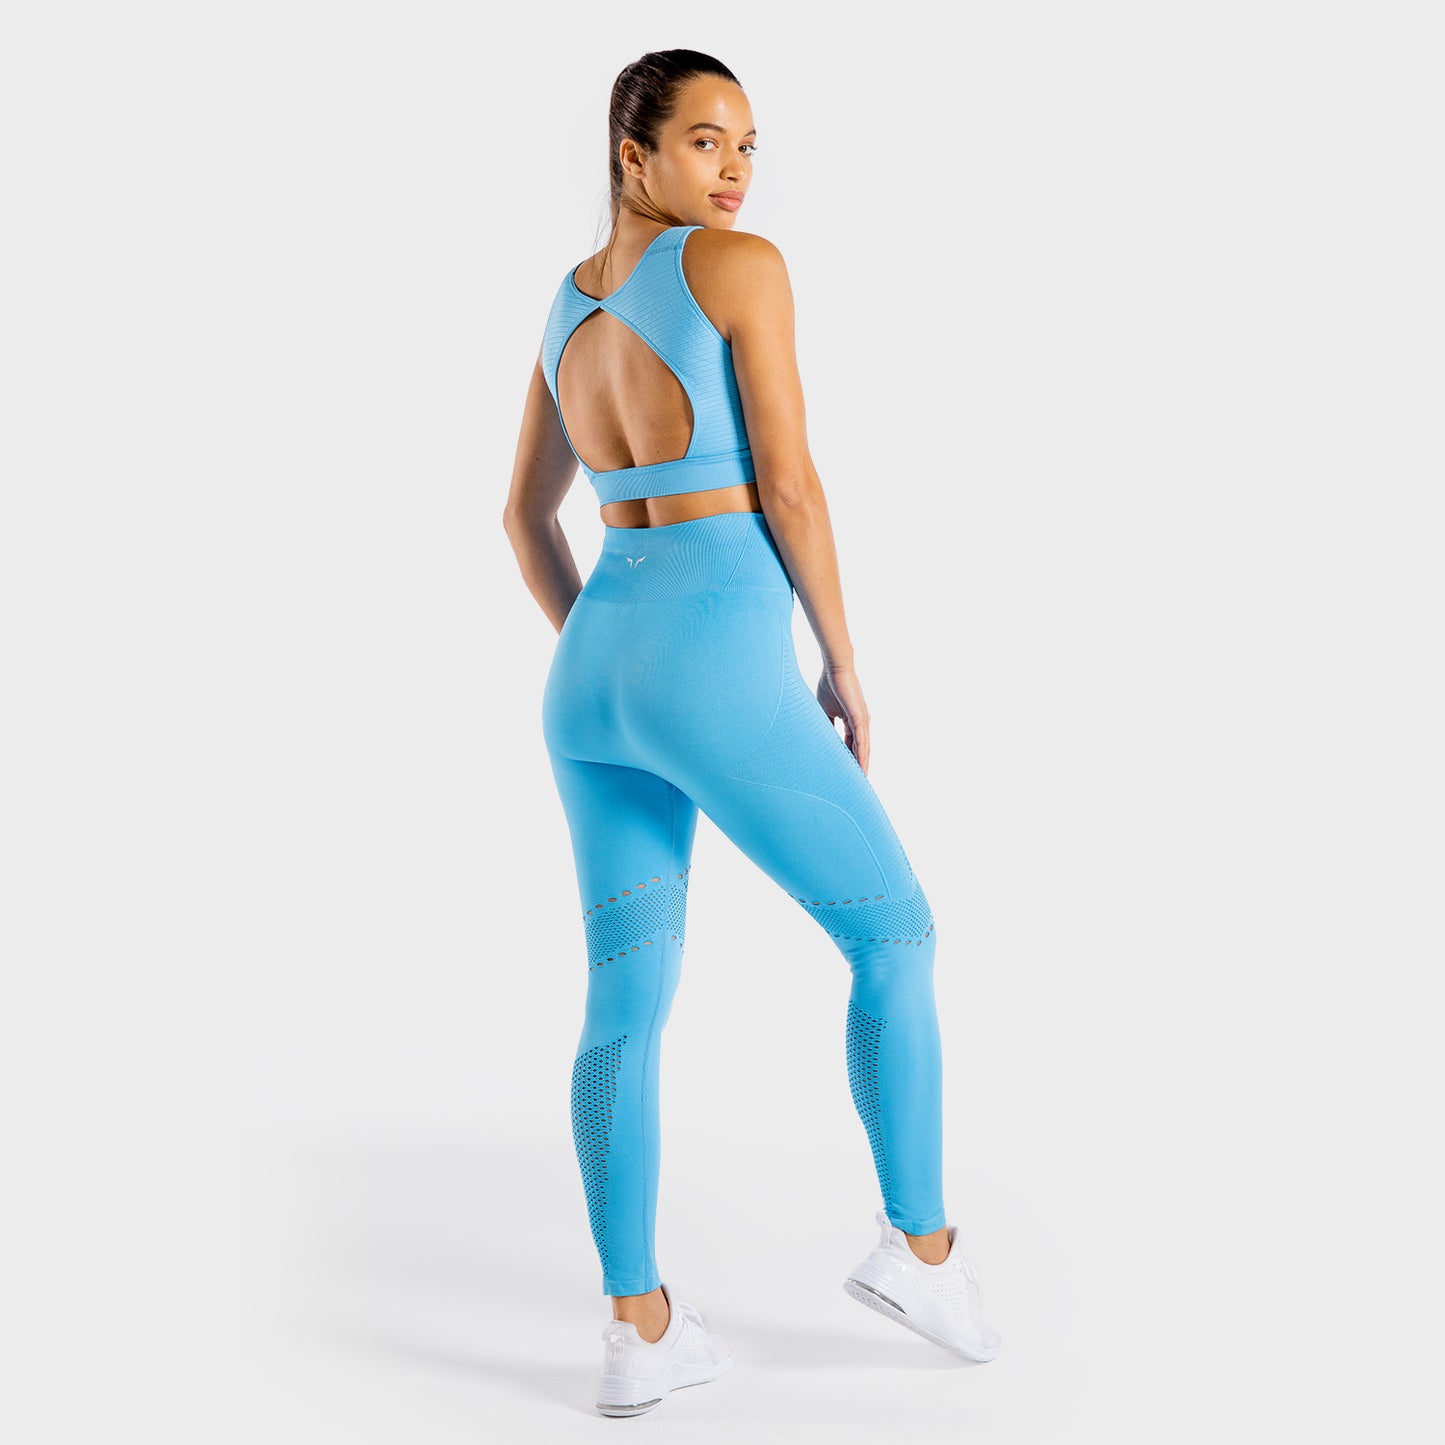 squatwolf-gym-leggings-for-women-meta-seamless-leggings-sky-blue-workout-clothes